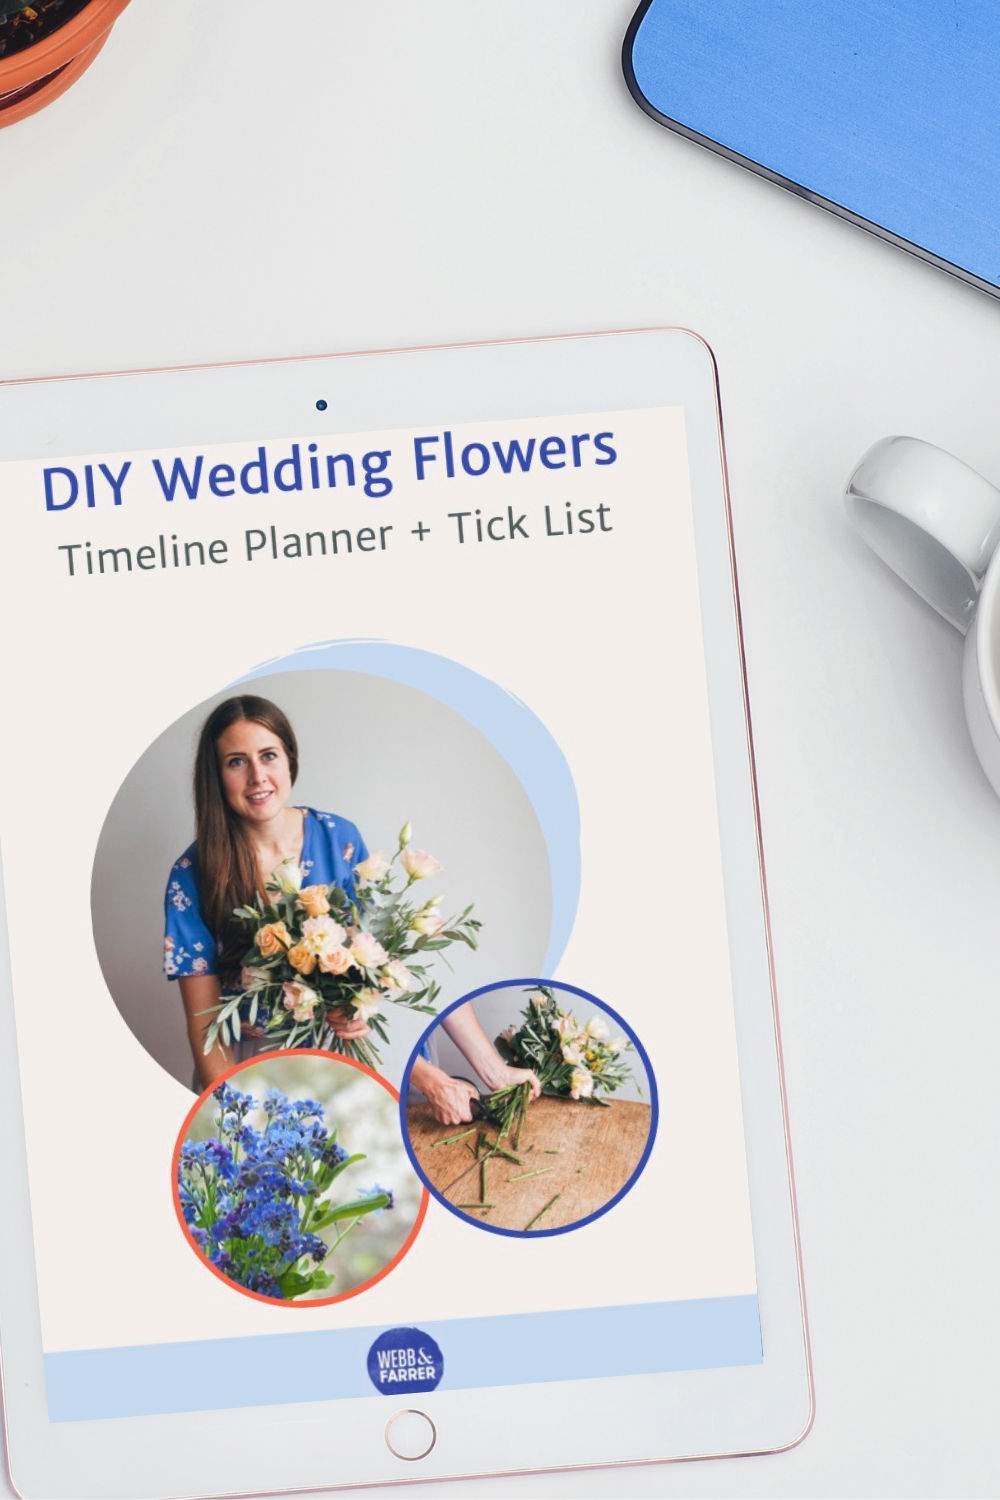 Free Timeline Planner for DIY wedding flowers